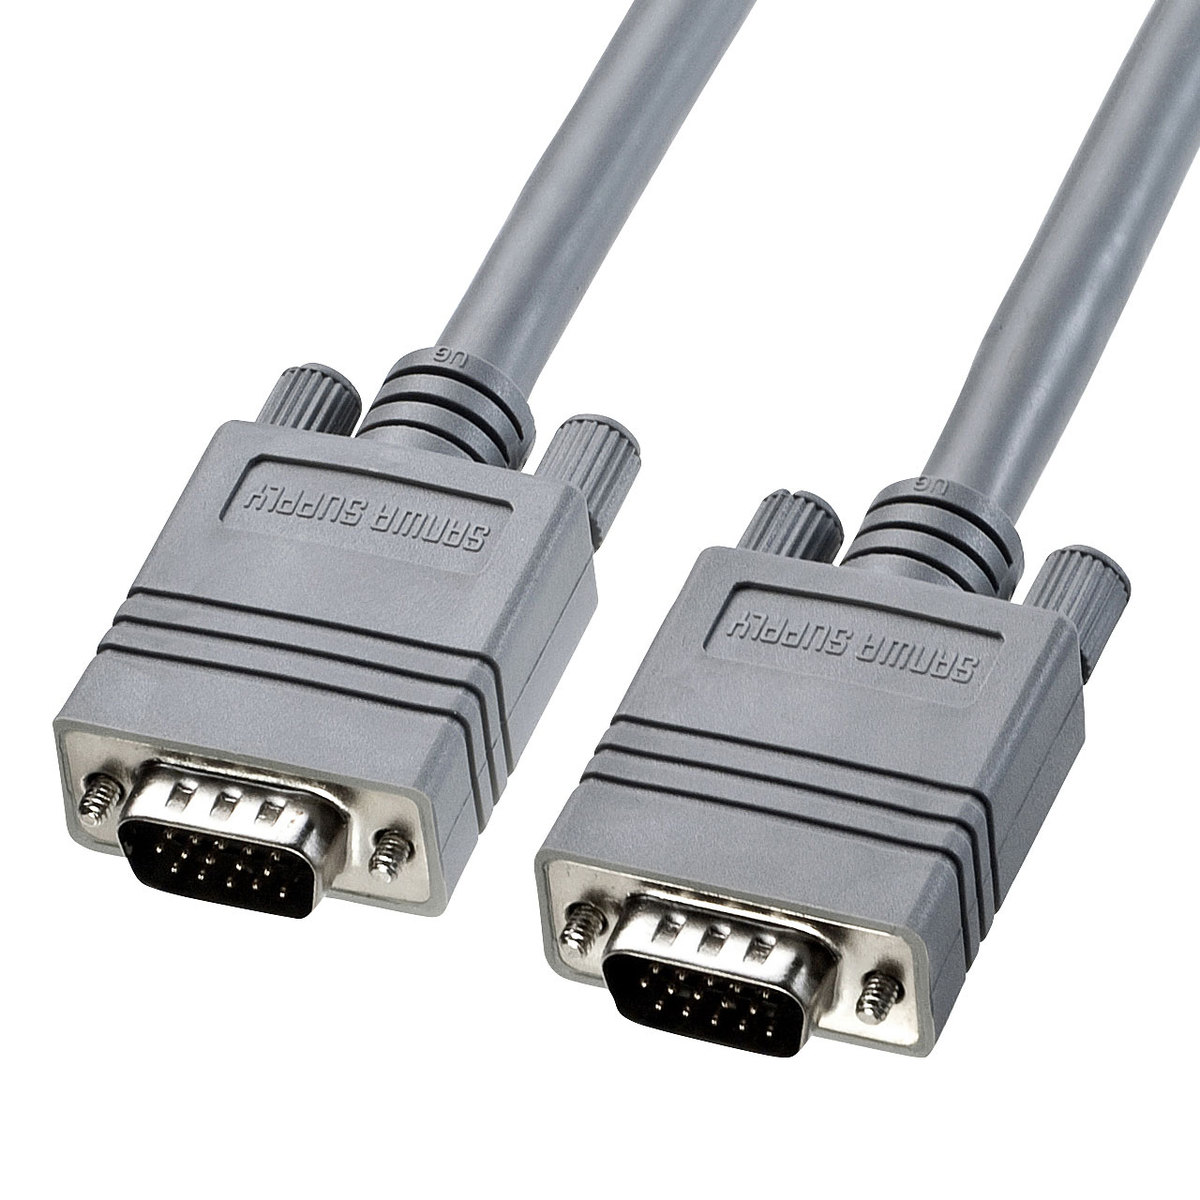 Display Cable (Compound Coaxial / Analog RGB), KB-CHD Series KB-CHD1520K2